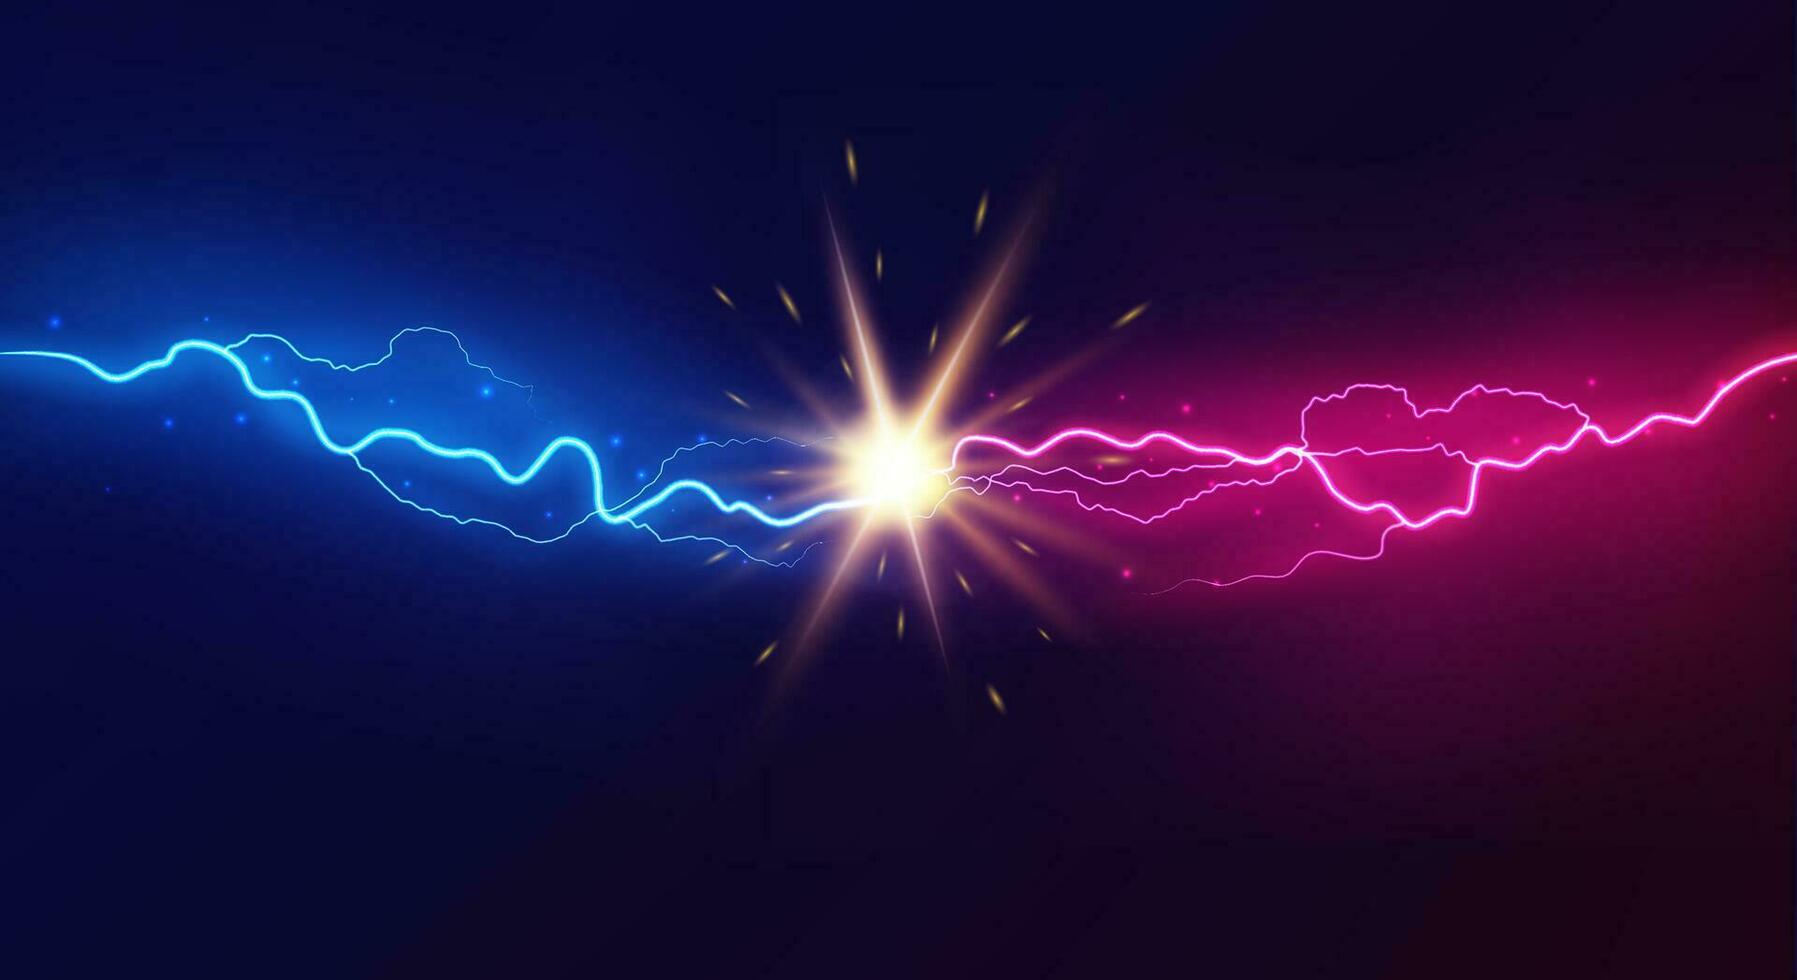 bliksem botsing. krachtig gekleurde bliksem, elektrisch krachten blikseminslag botsen elektrisch energie sprankelend ontploffing, vector versus helder ontwerp confrontatie concept